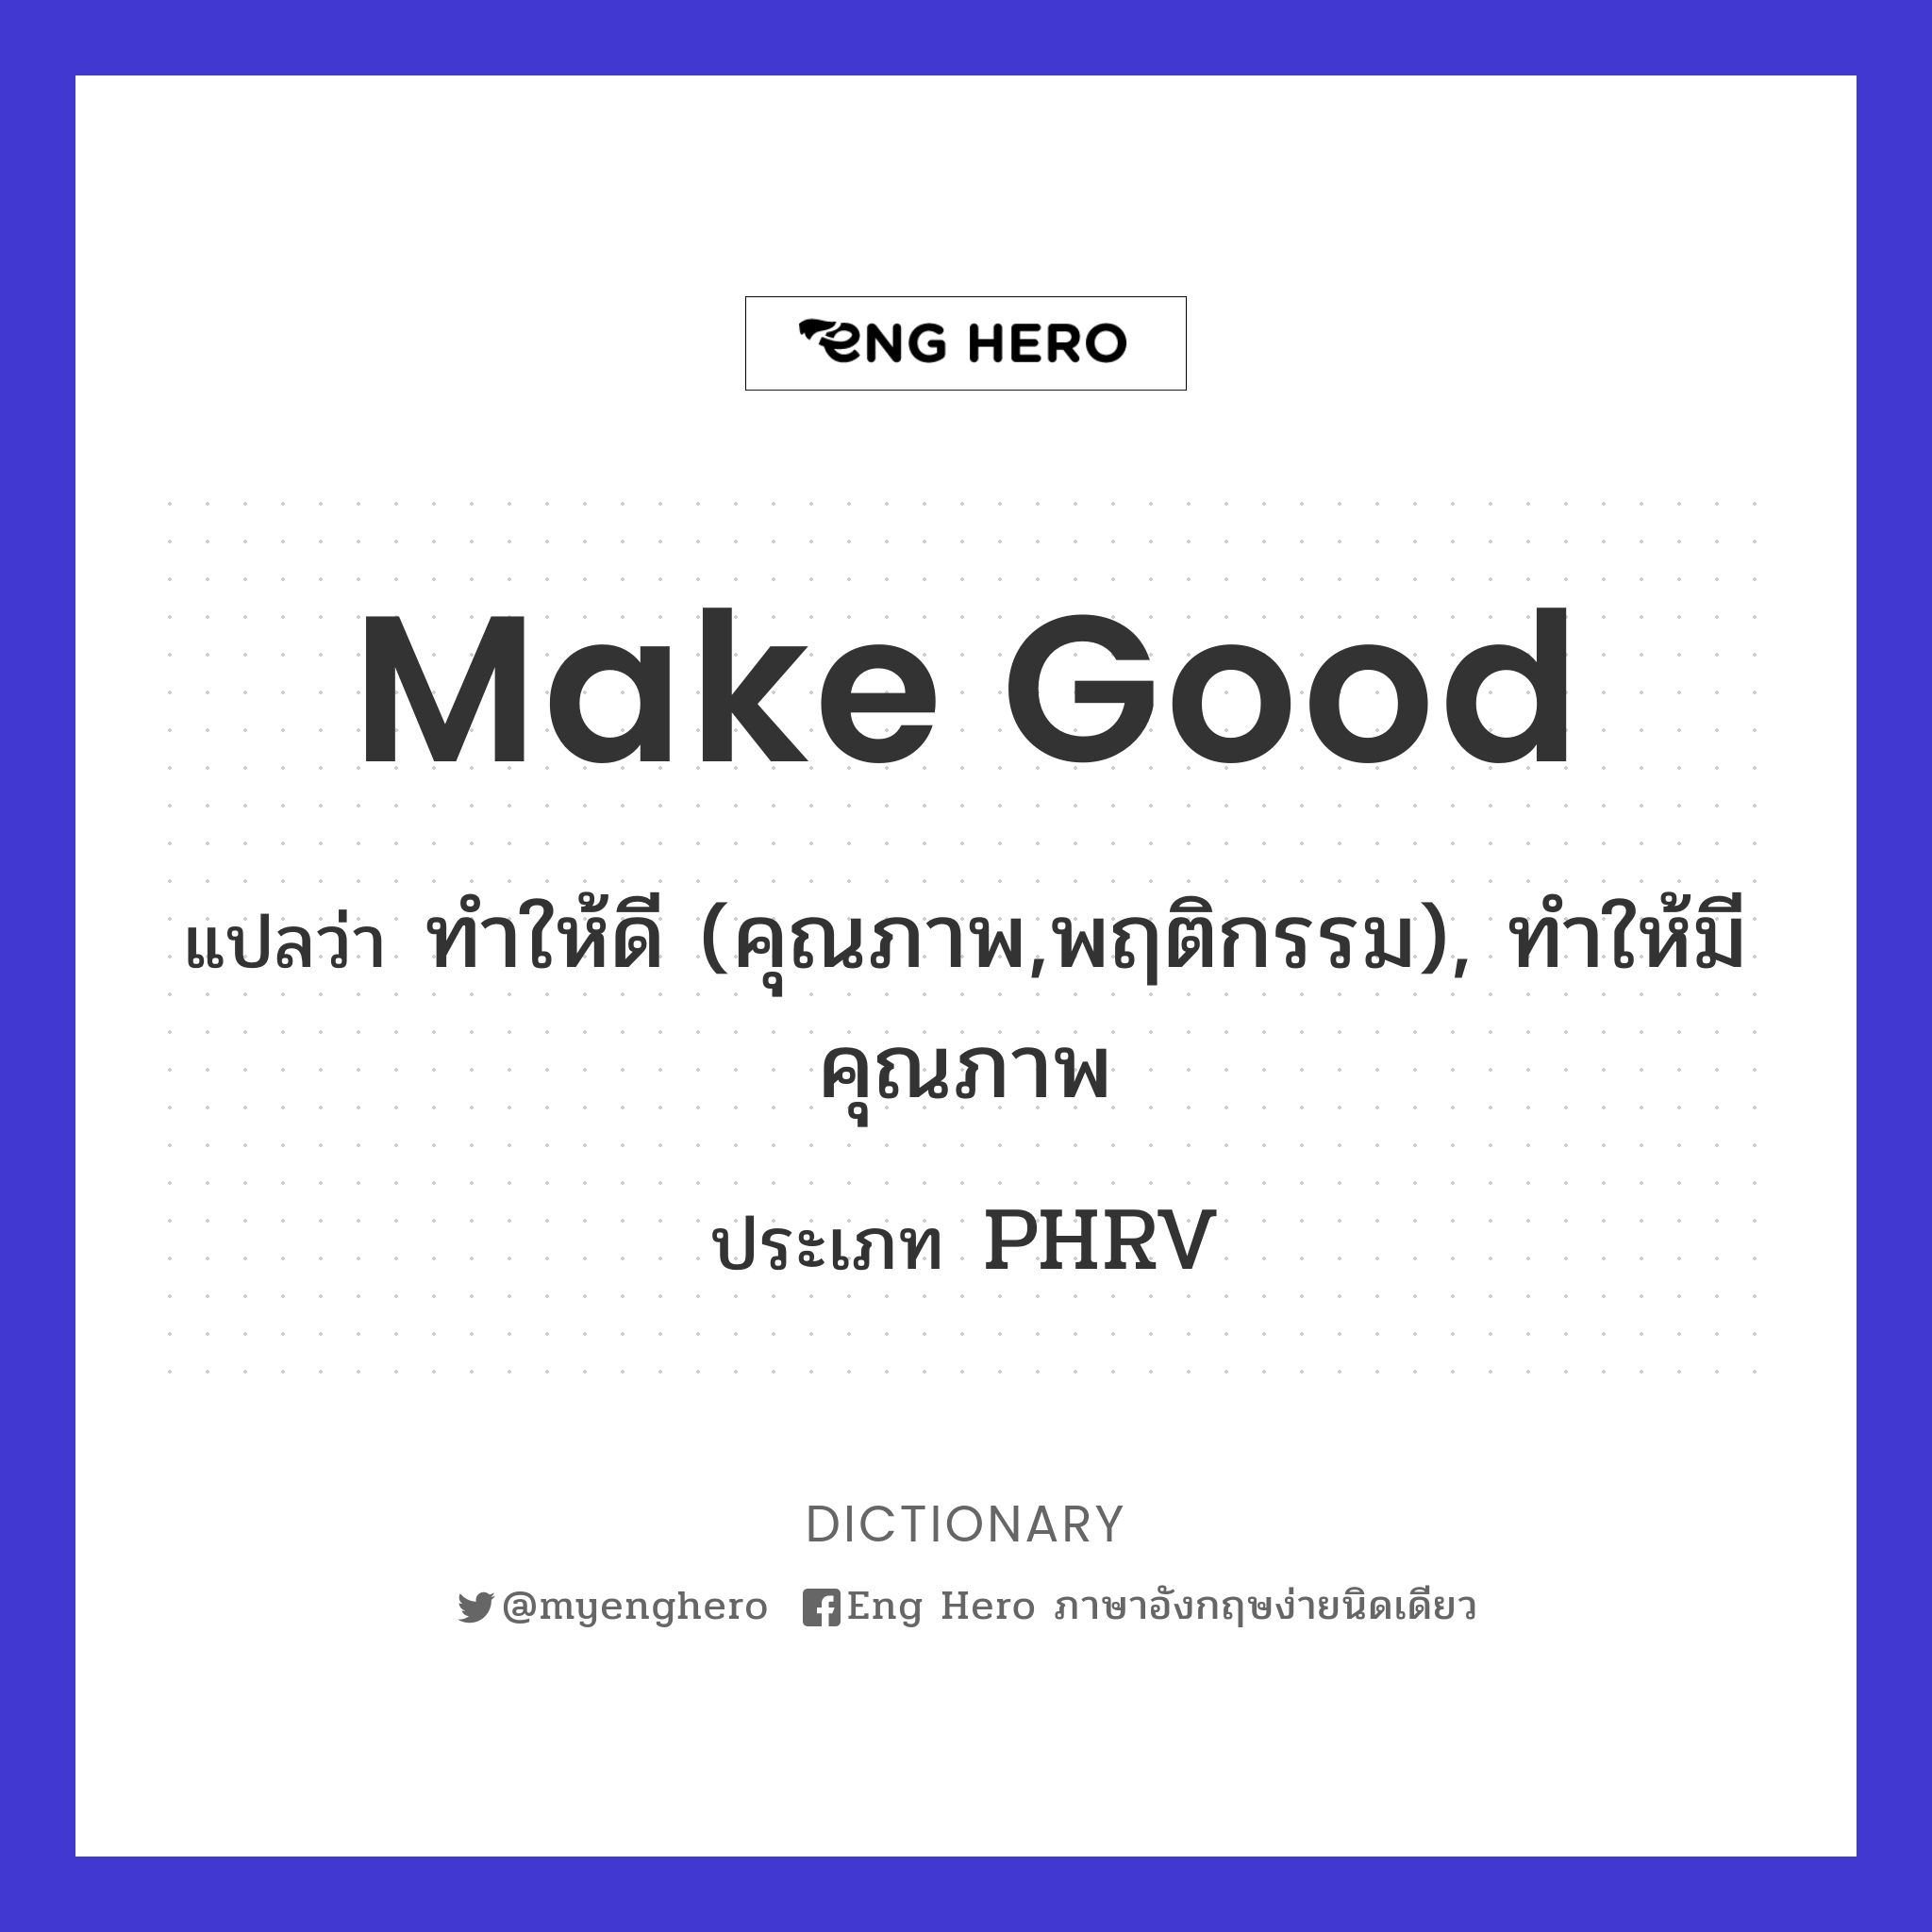 make good